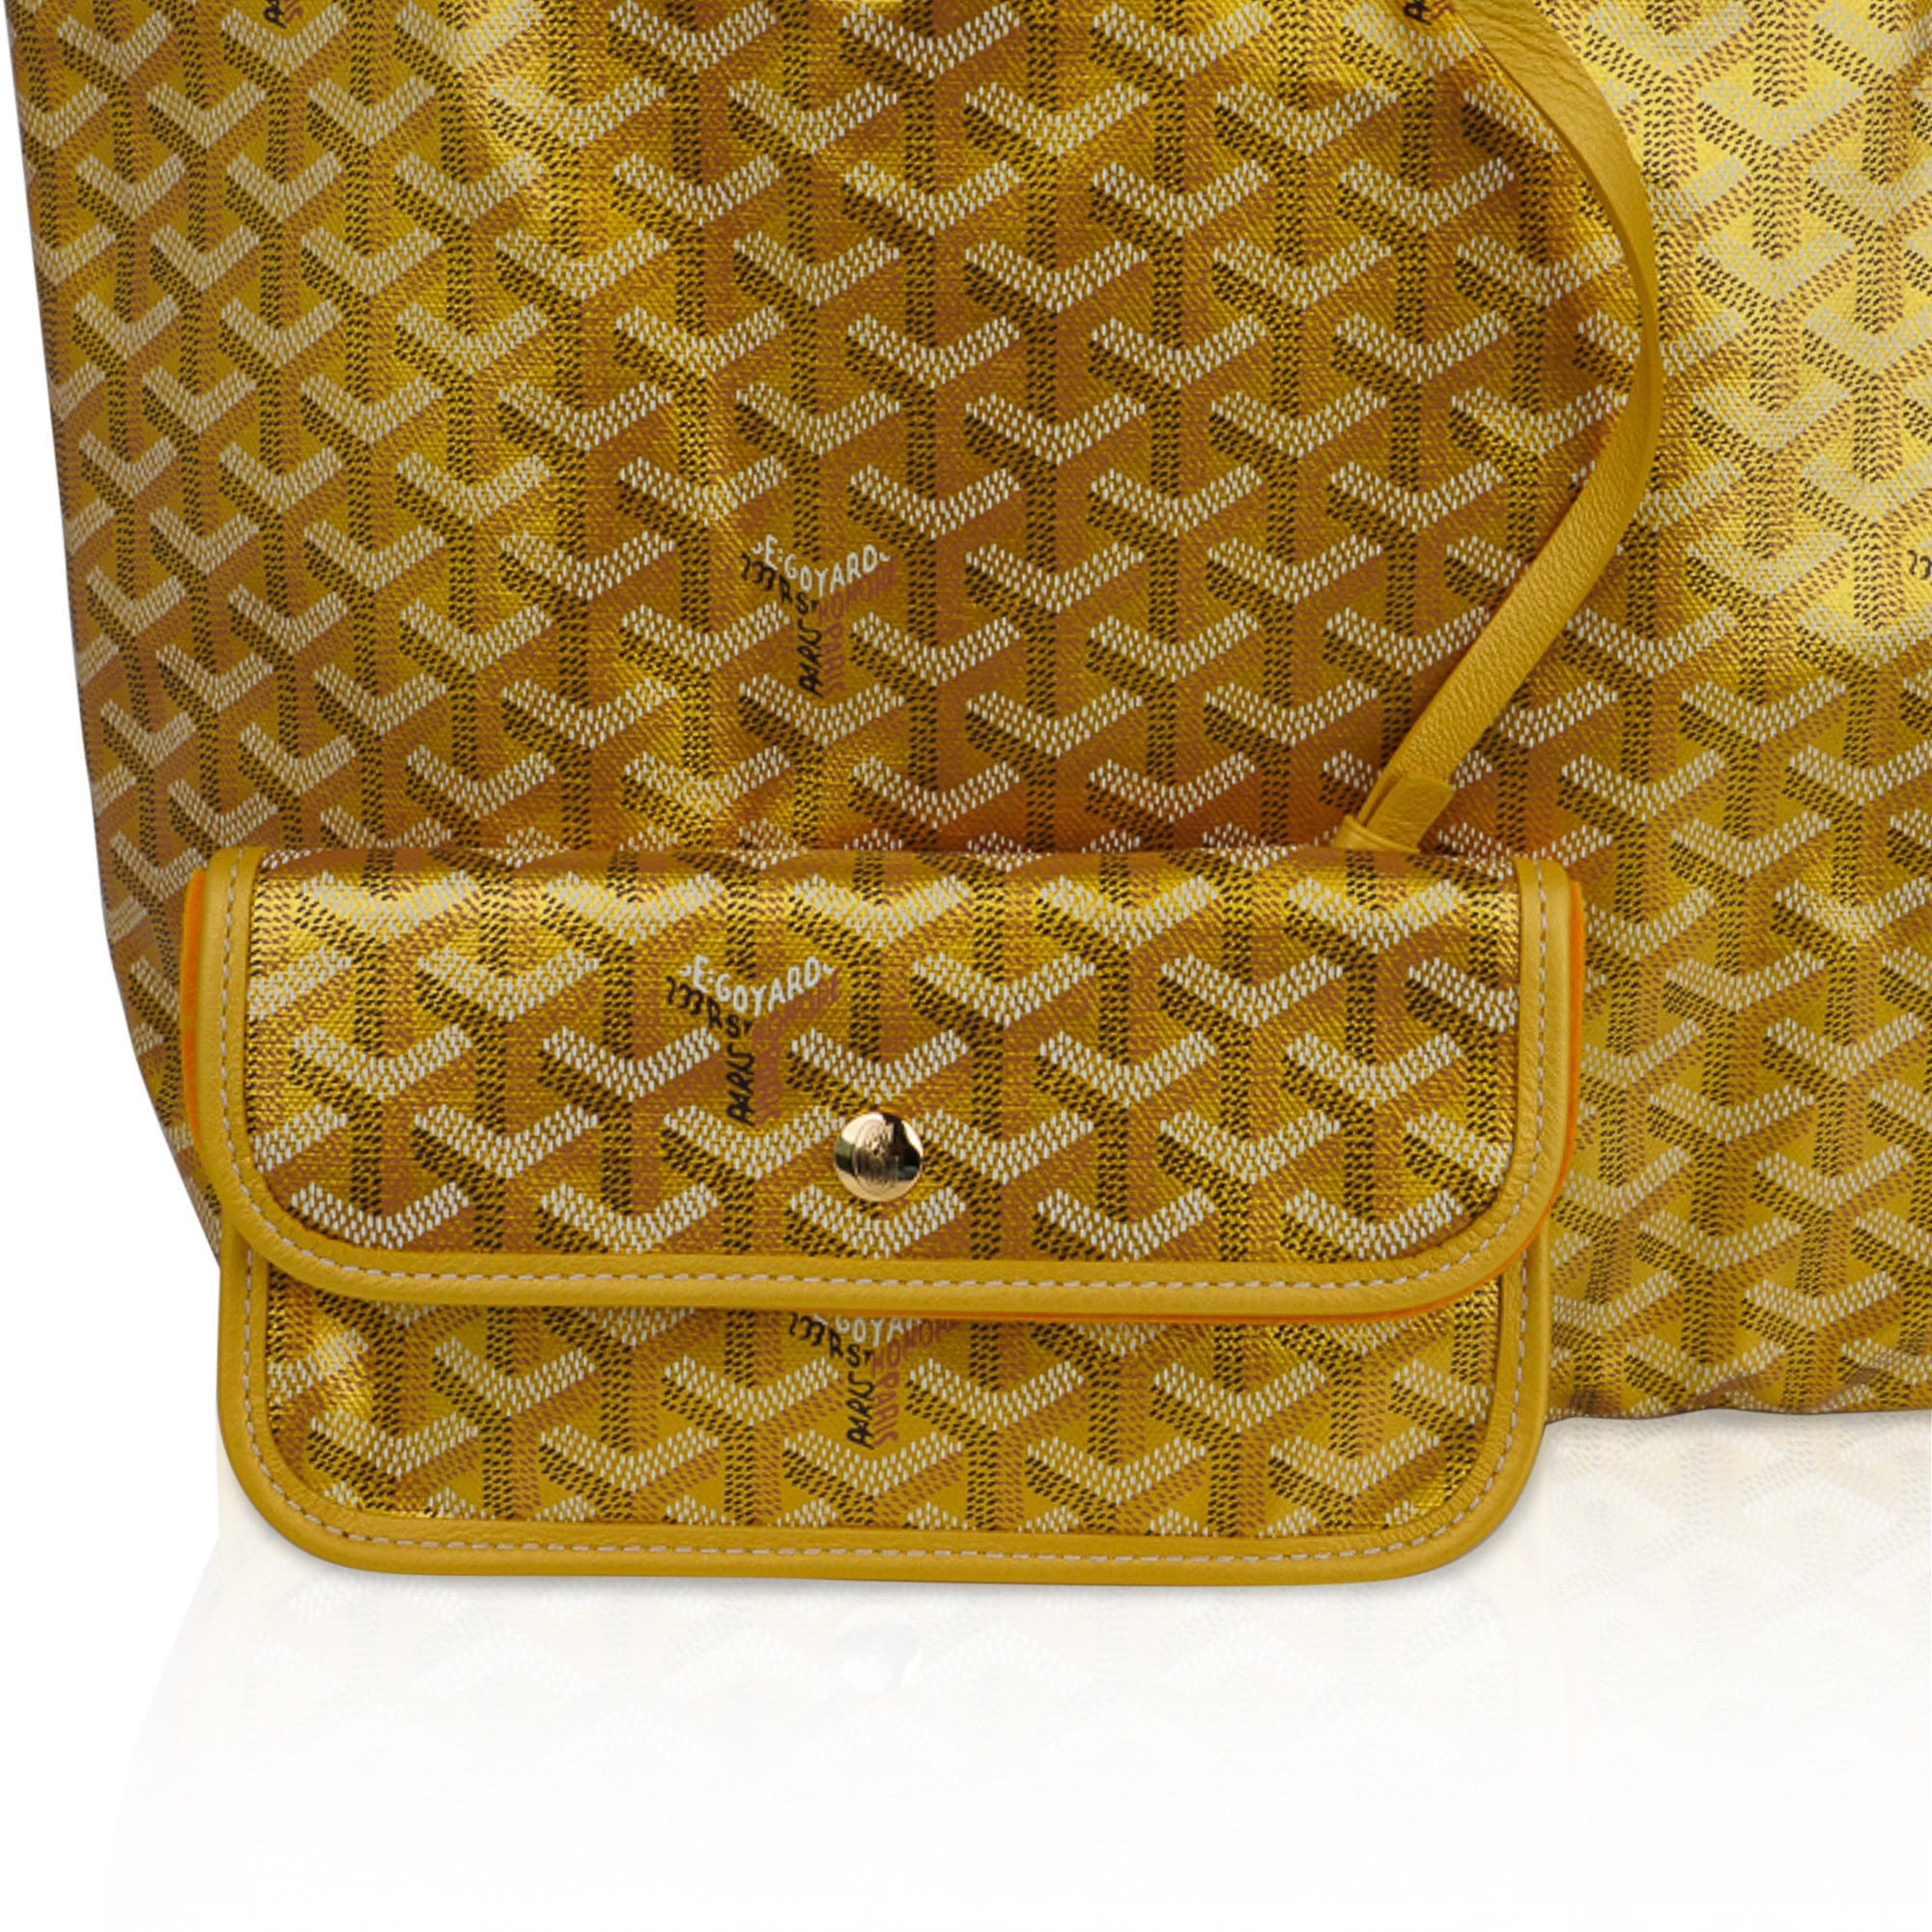 Goyard Saint Louis Metallic Gold PM Tote Bag Limited Edition 2021 New w/Tag